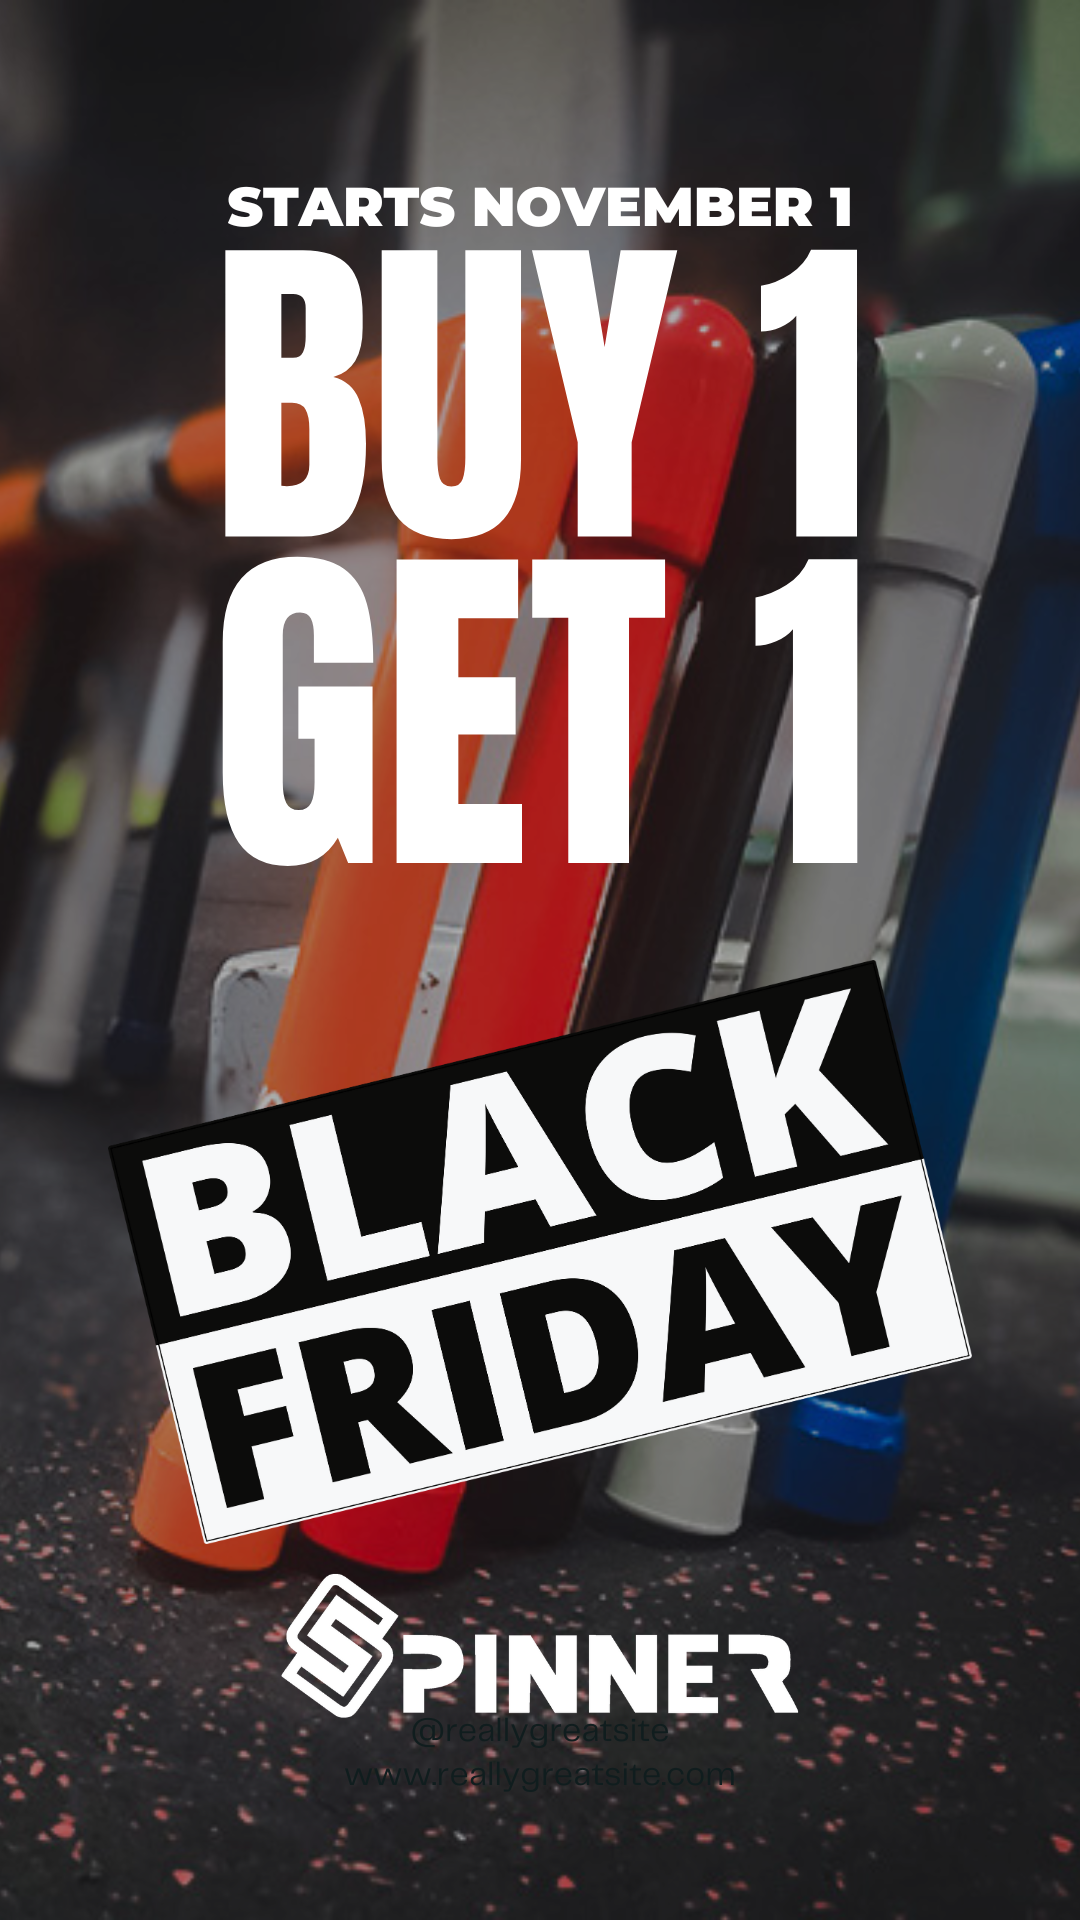 Black Friday Sales Start November 1